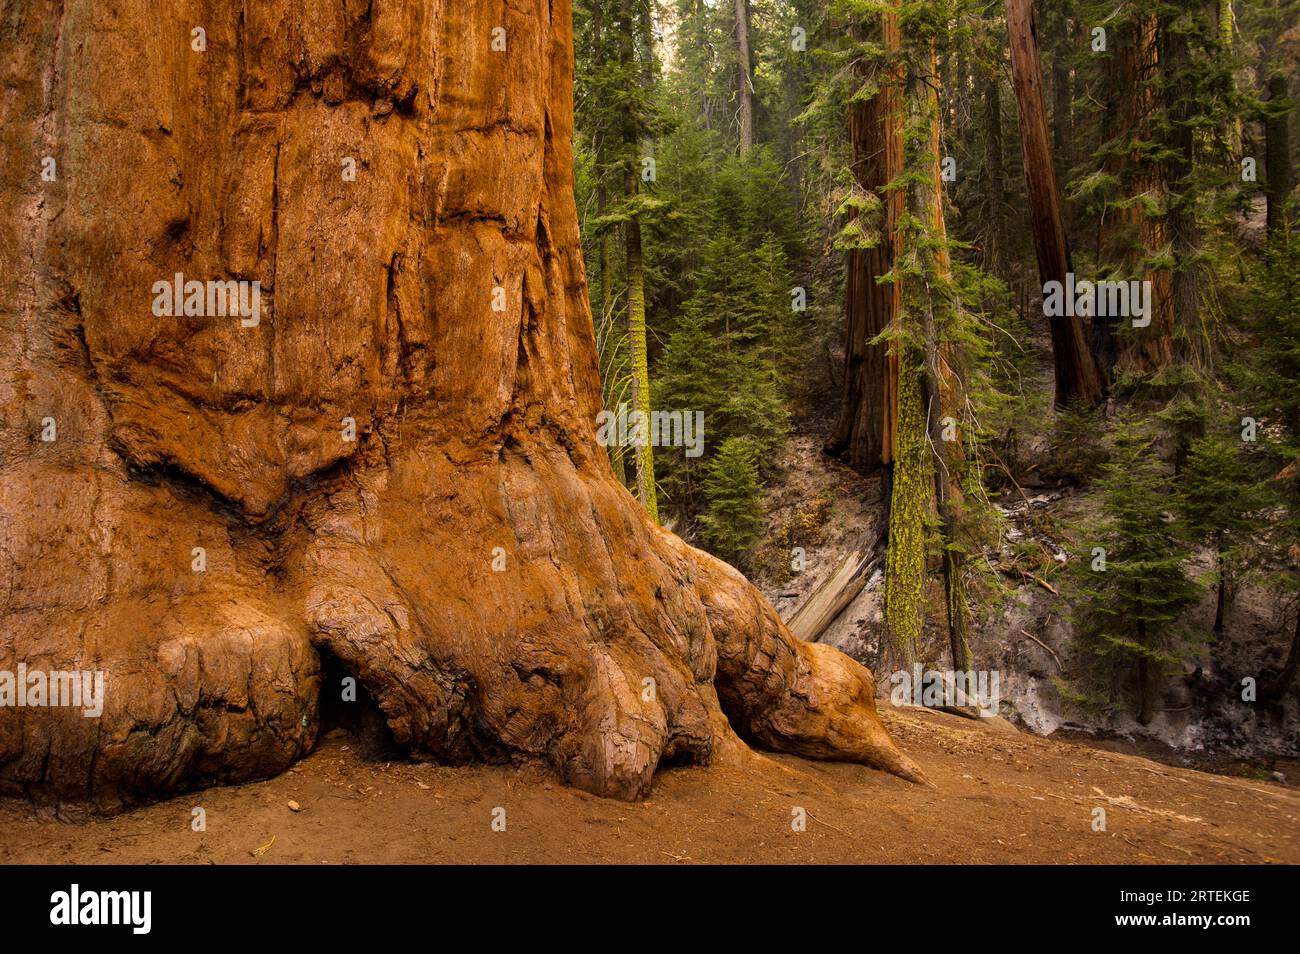 Trunk of a Giant sequoia tree (Sequoiadendron giganteum), Sequoia National Park, California, USA; California, United States of America Stock Photo